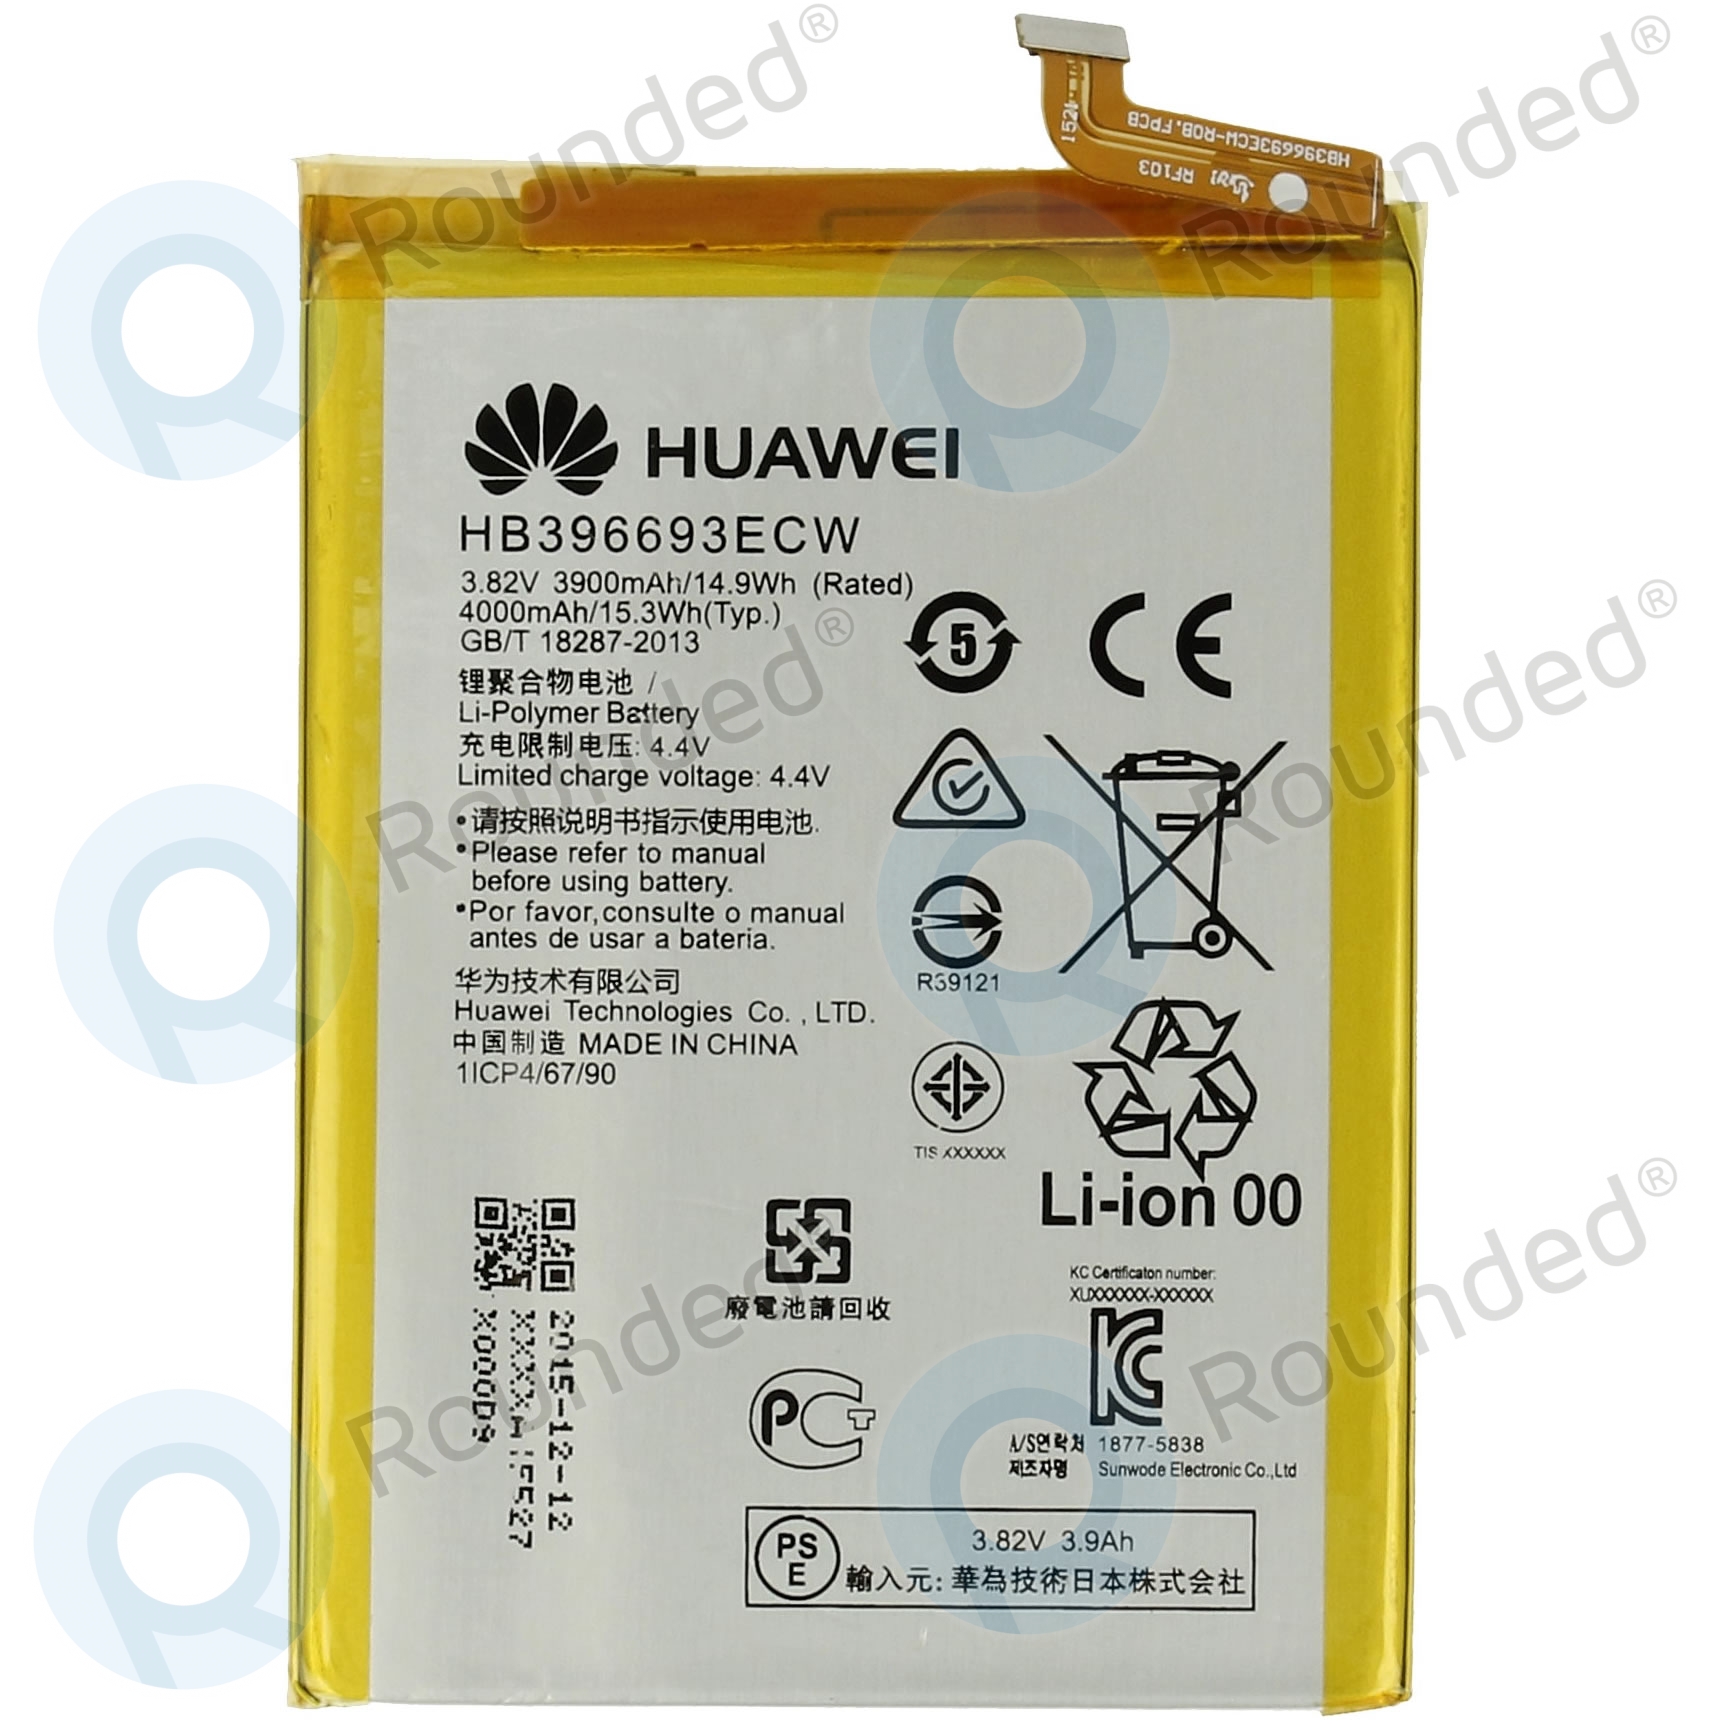 Huawei Mate Battery HB396693ECW 4000mAh 24021885